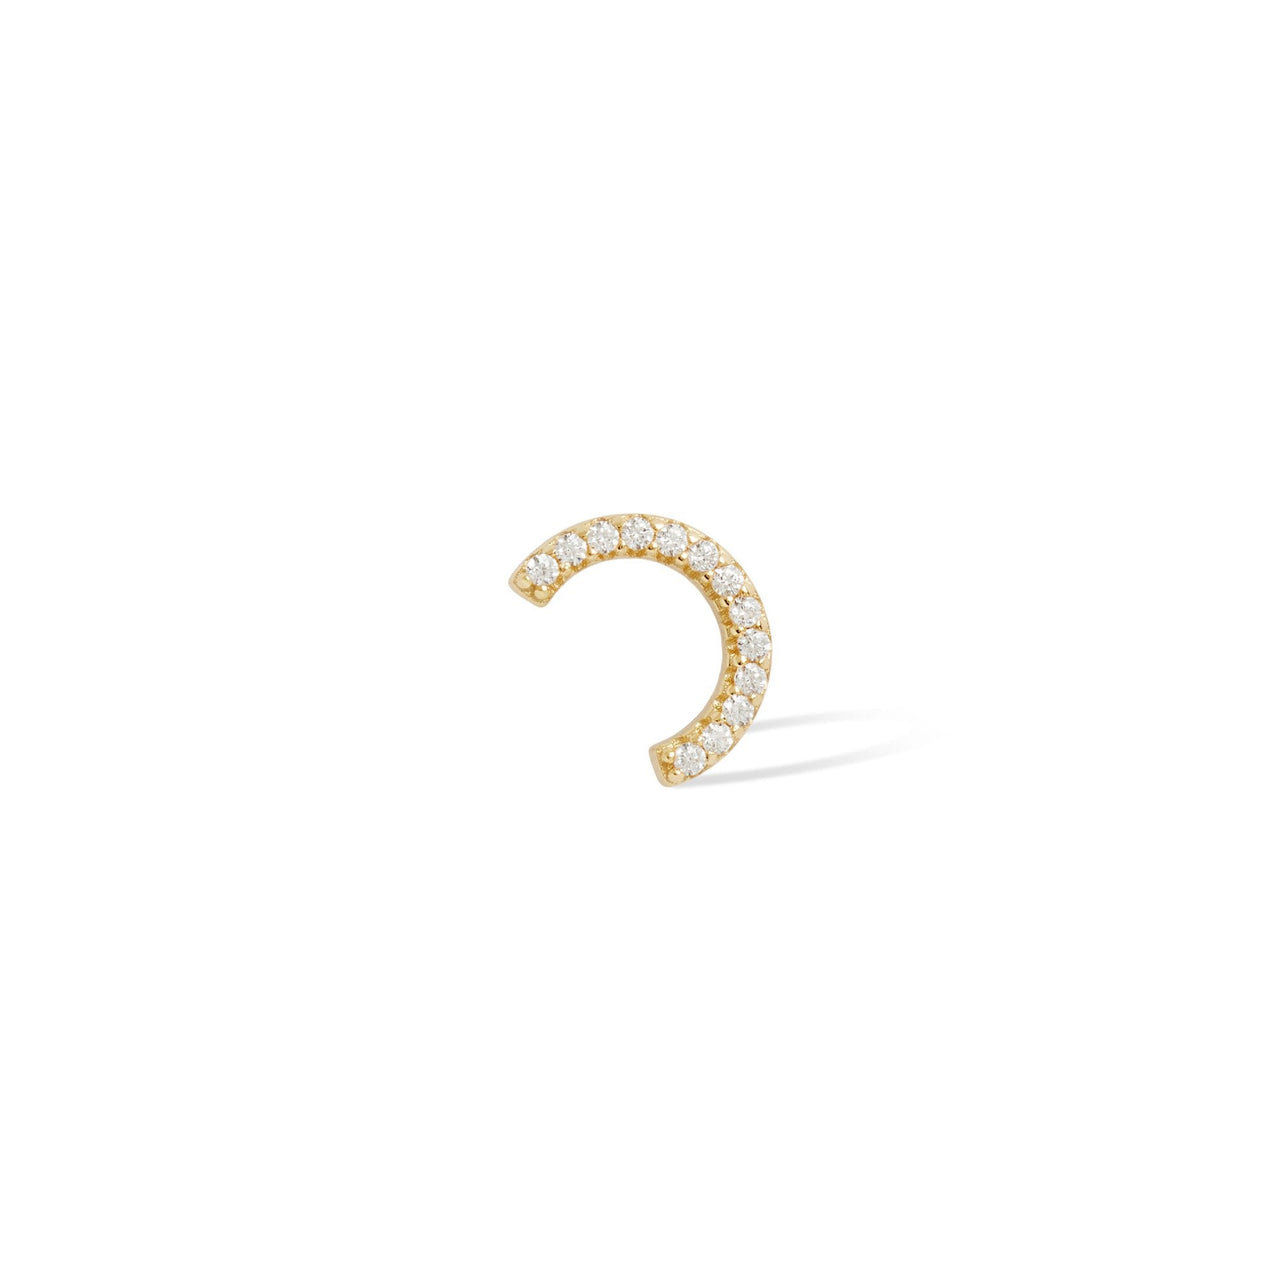 Single earring Half circle gold vermeil stud